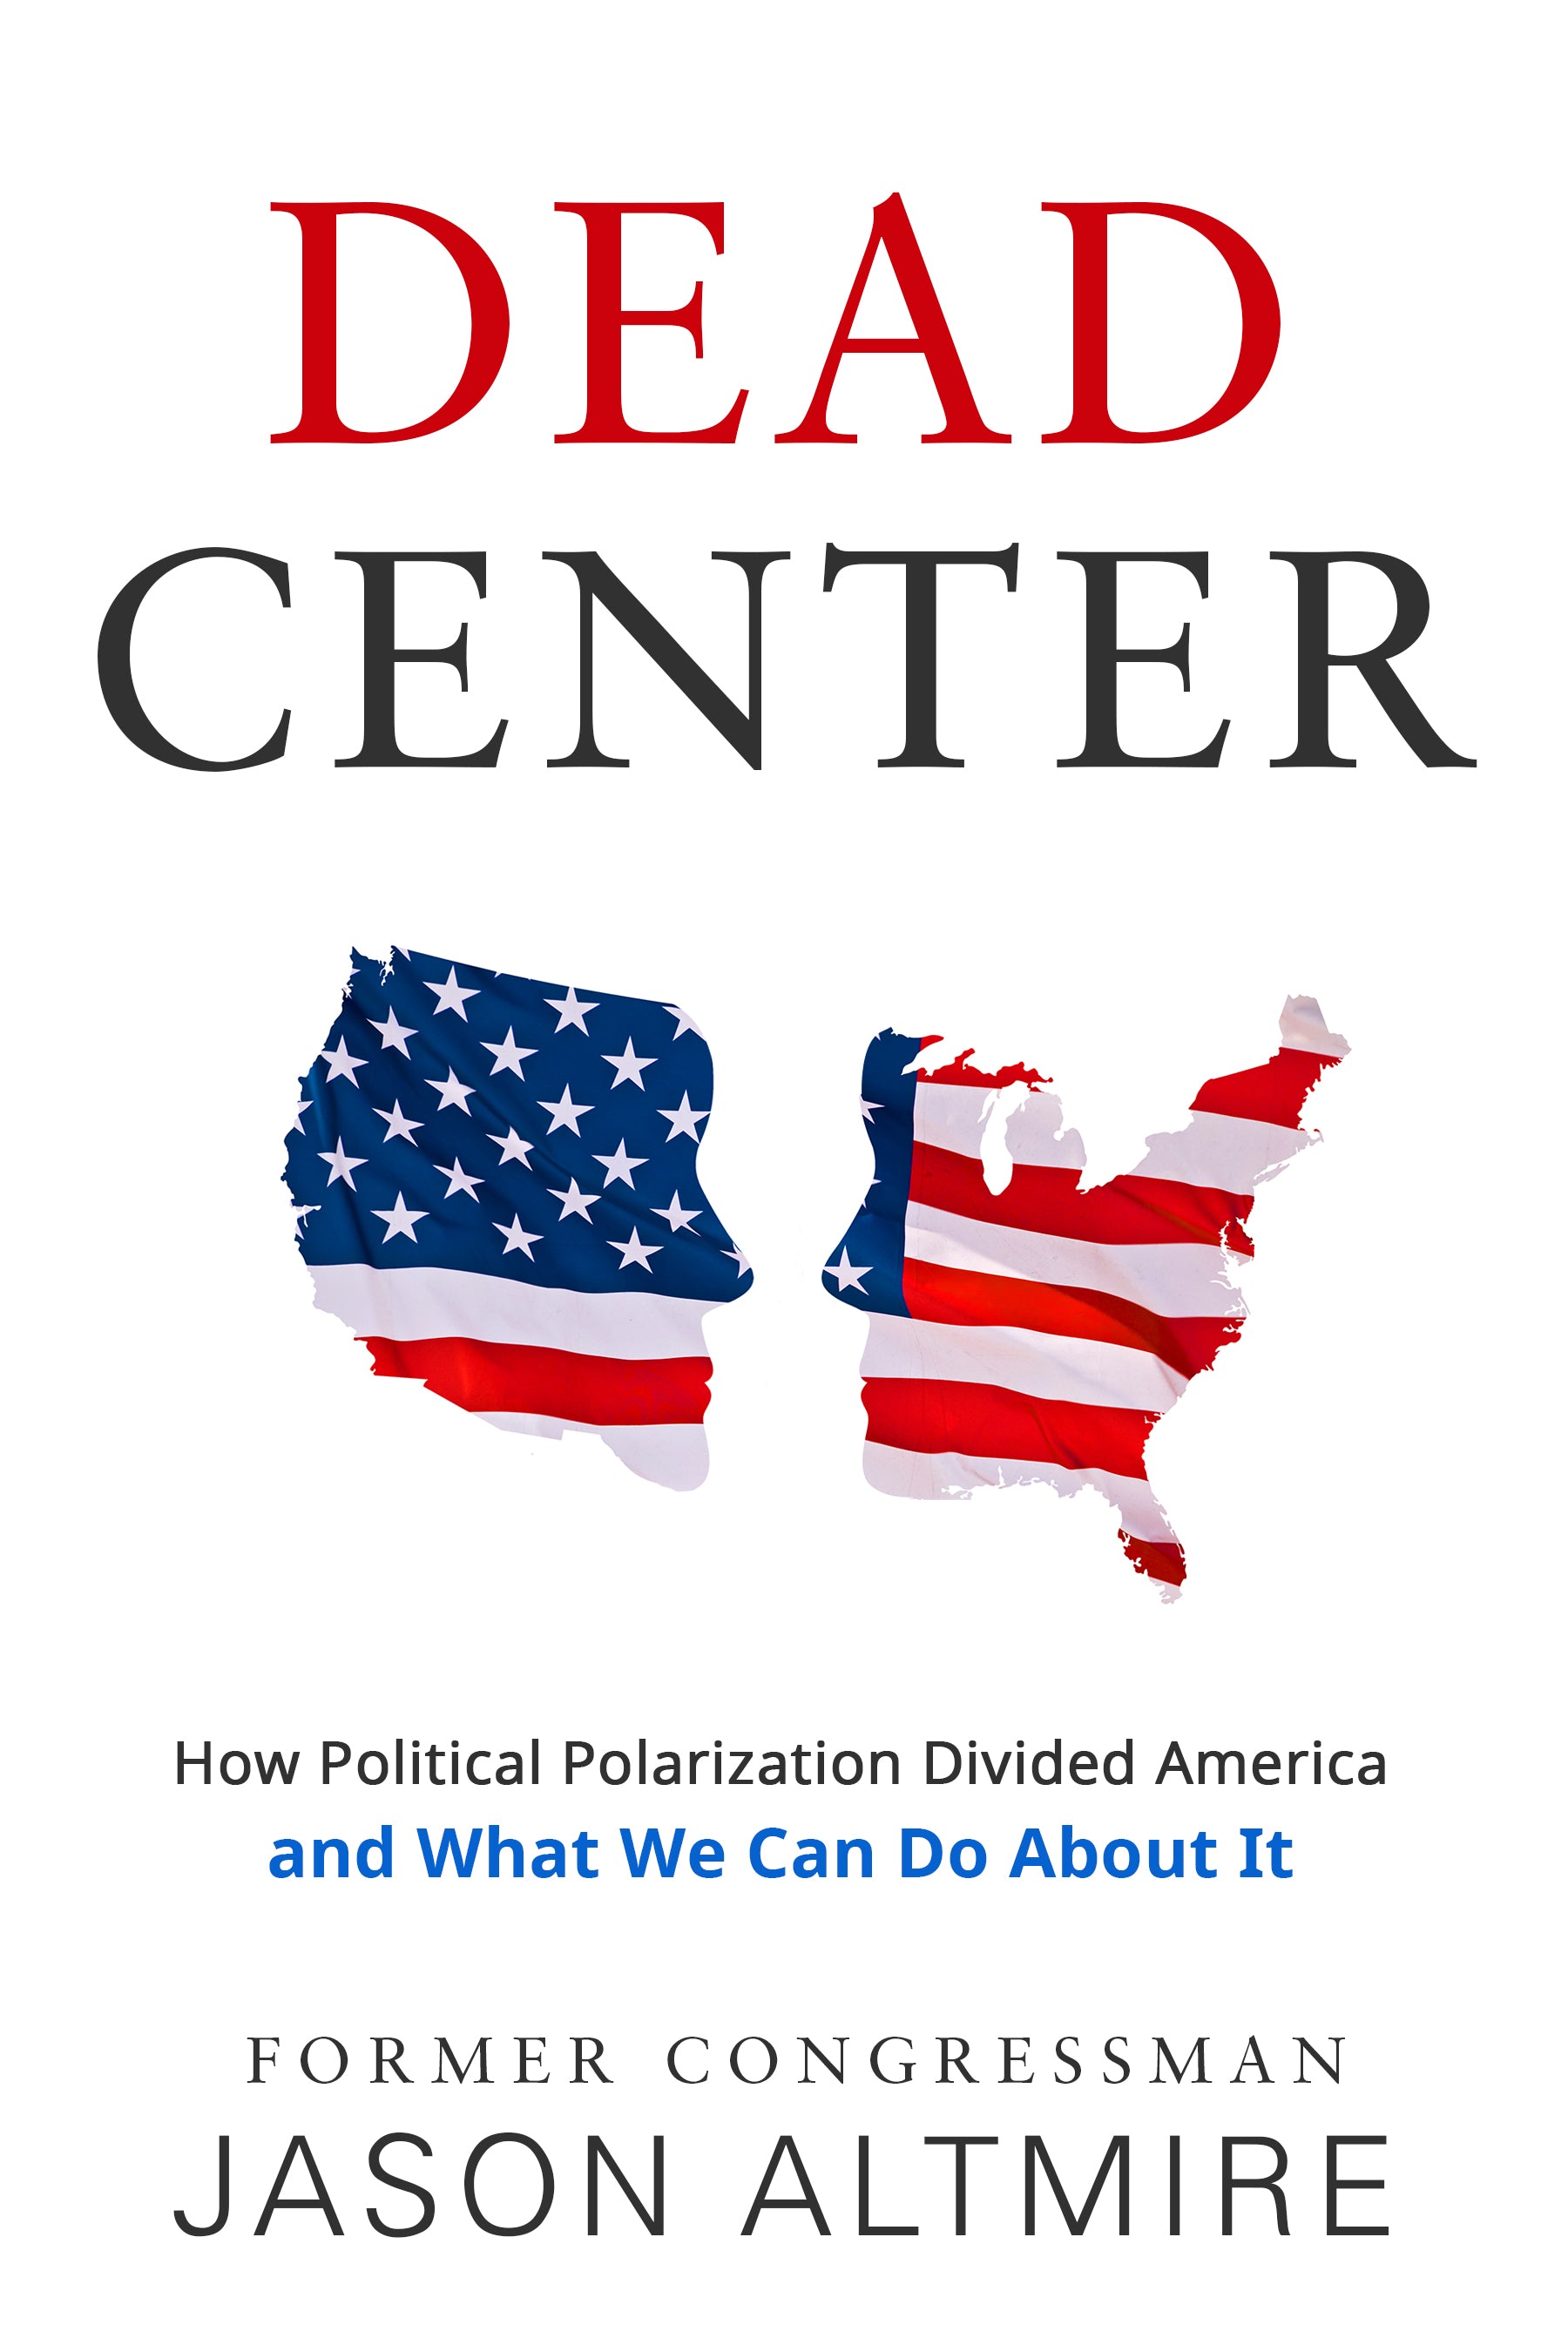 Former Congressman Jason Altmire's “Dead Center” repeats as the Sunbury Press bestseller for September